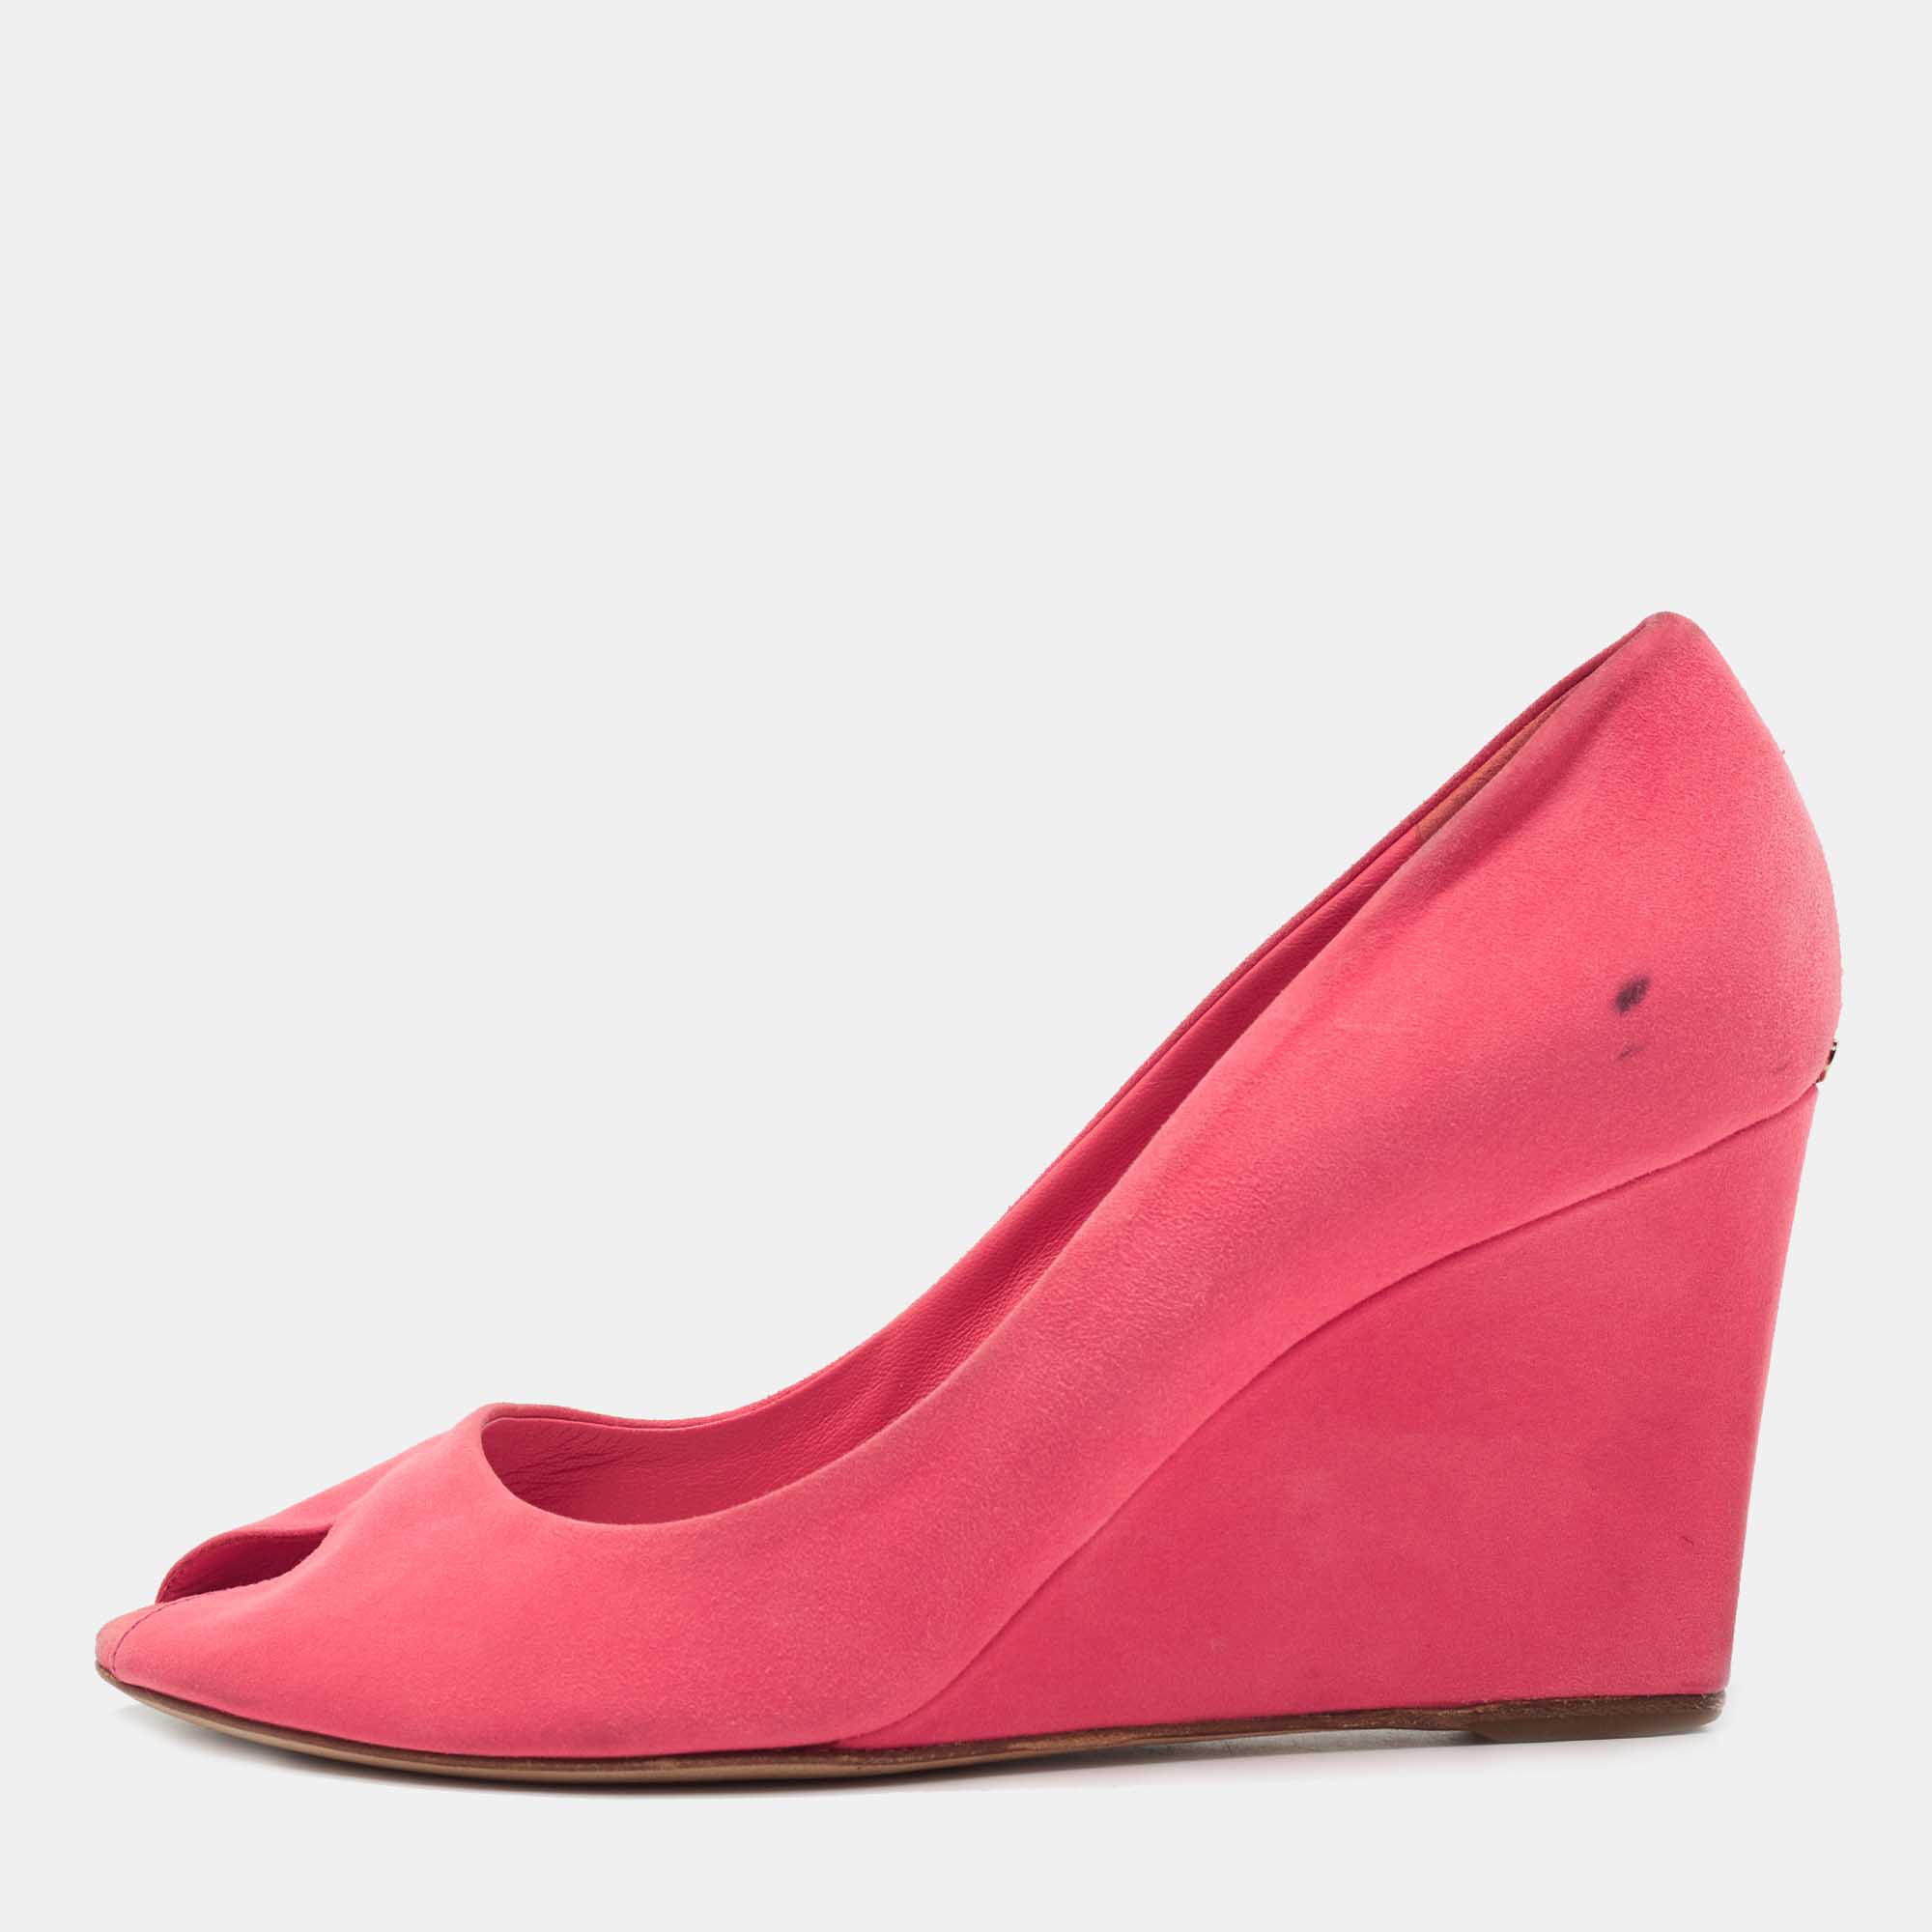 

Dior Pink Suede Peep Toe Wedge Pumps Size